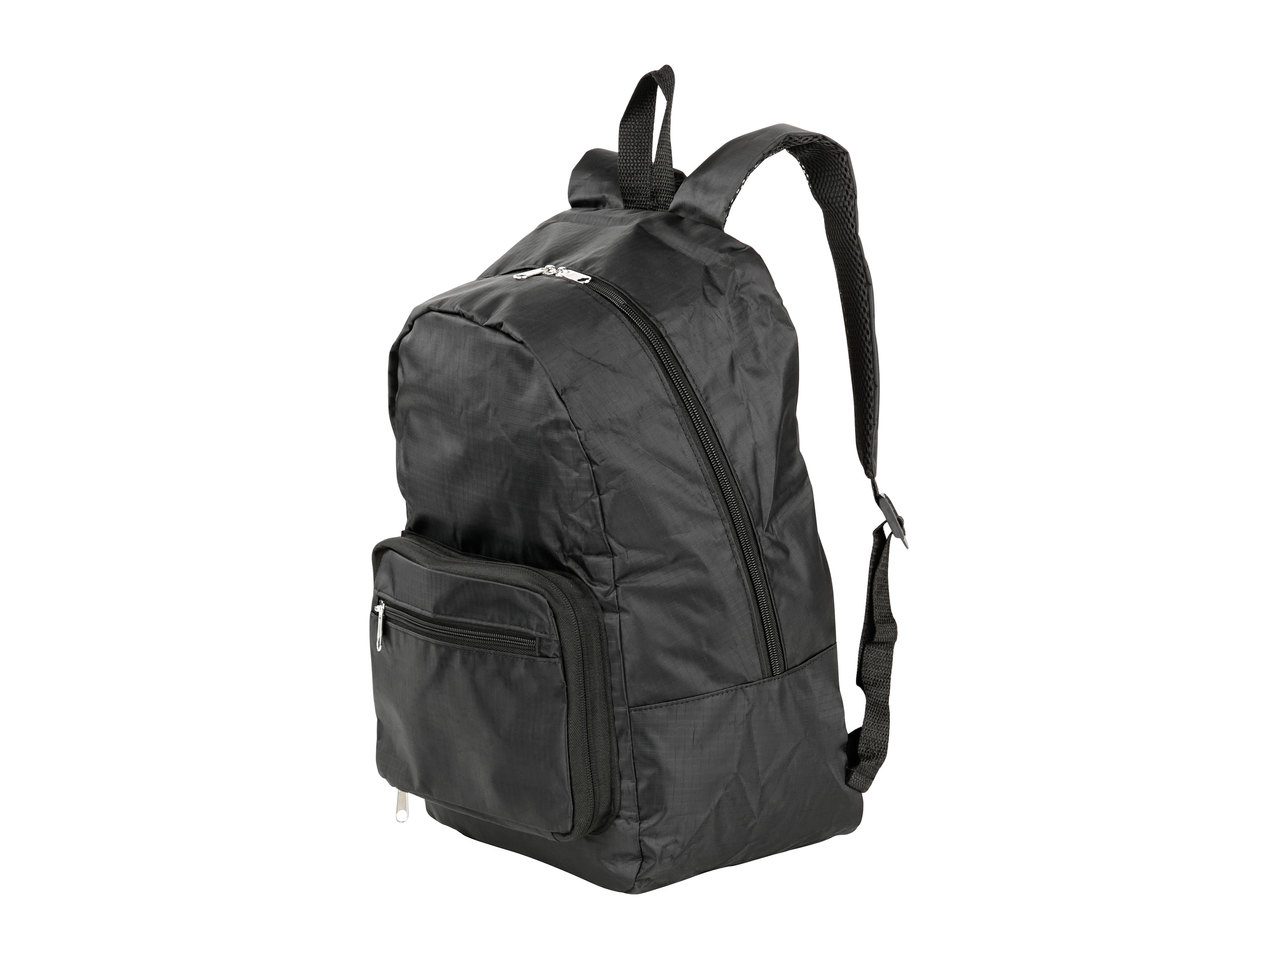 Top Move Foldable Backpack or Handbag1